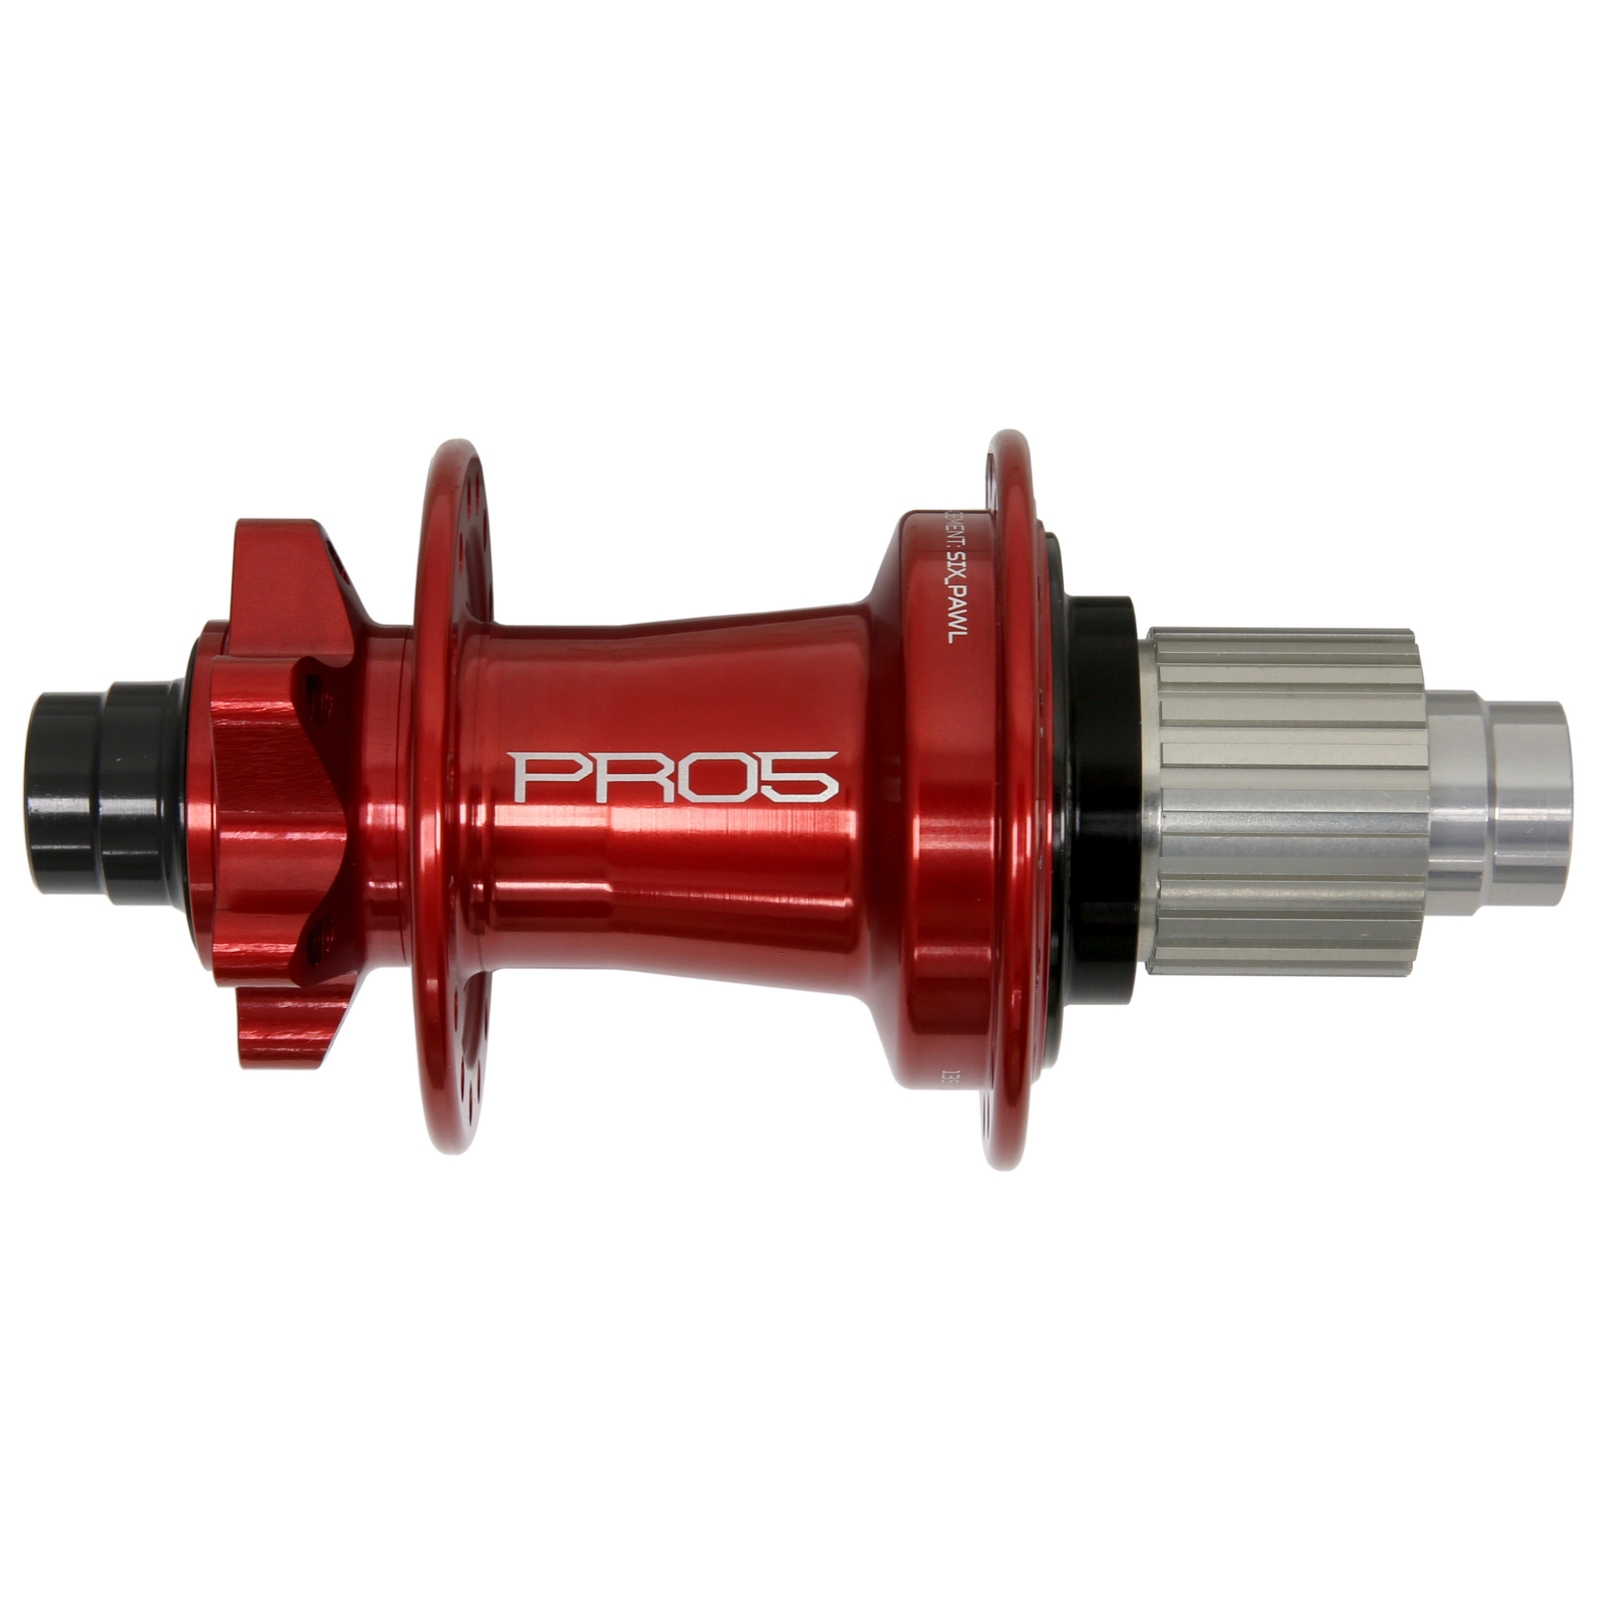 Productfoto van Hope Pro 5 Achterwielnaaf - 6-Bolt - 12x142mm | Shimano Micro Spline - rood